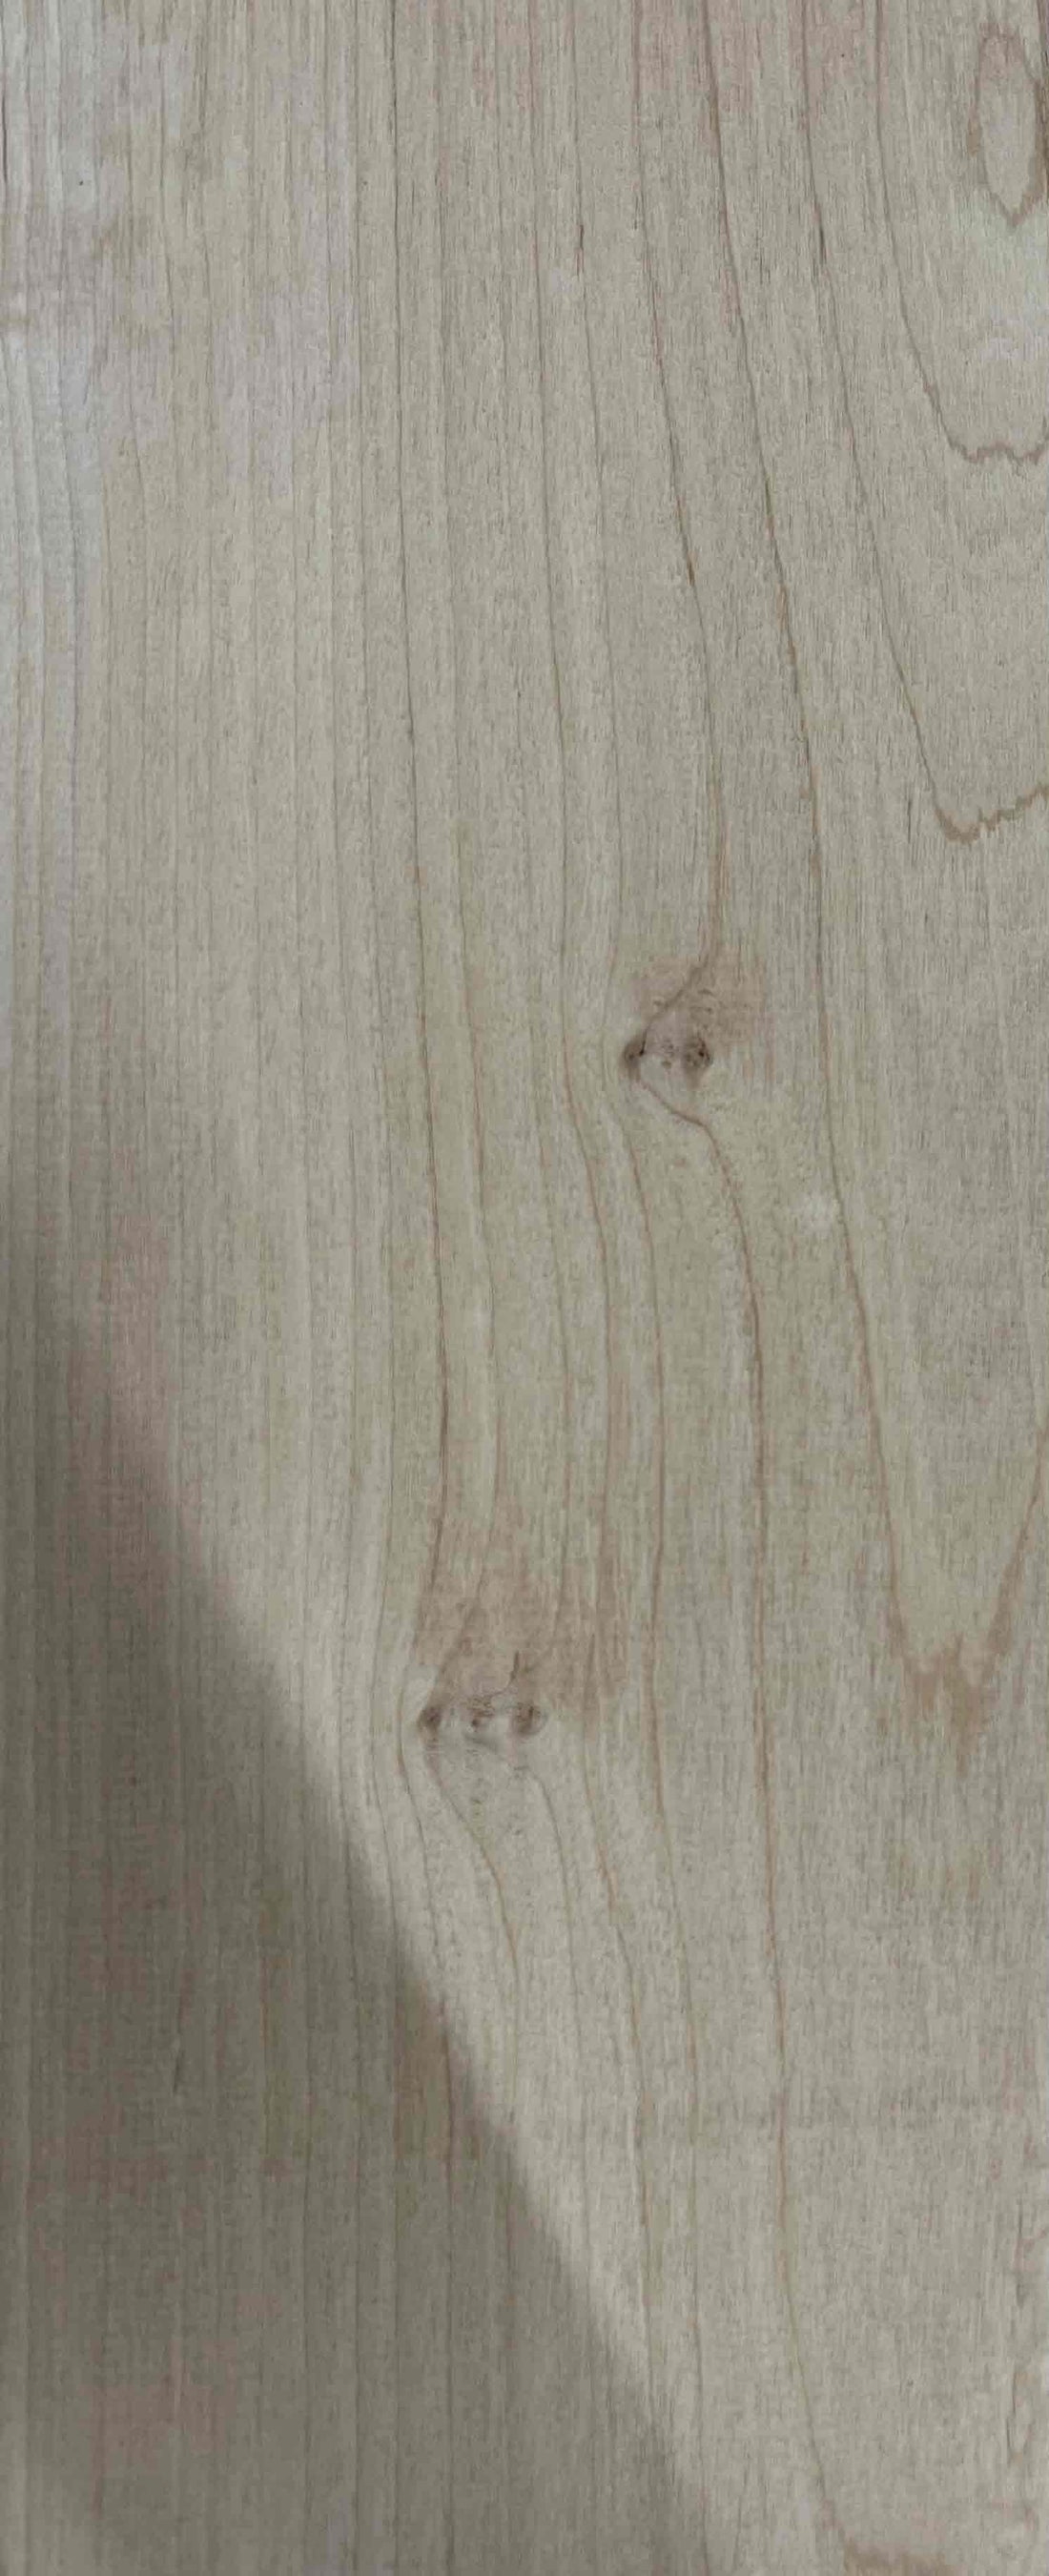 Premium American Hardwood Alder 8/4 Lumber - Exotic Wood Zone - Buy online Across USA 